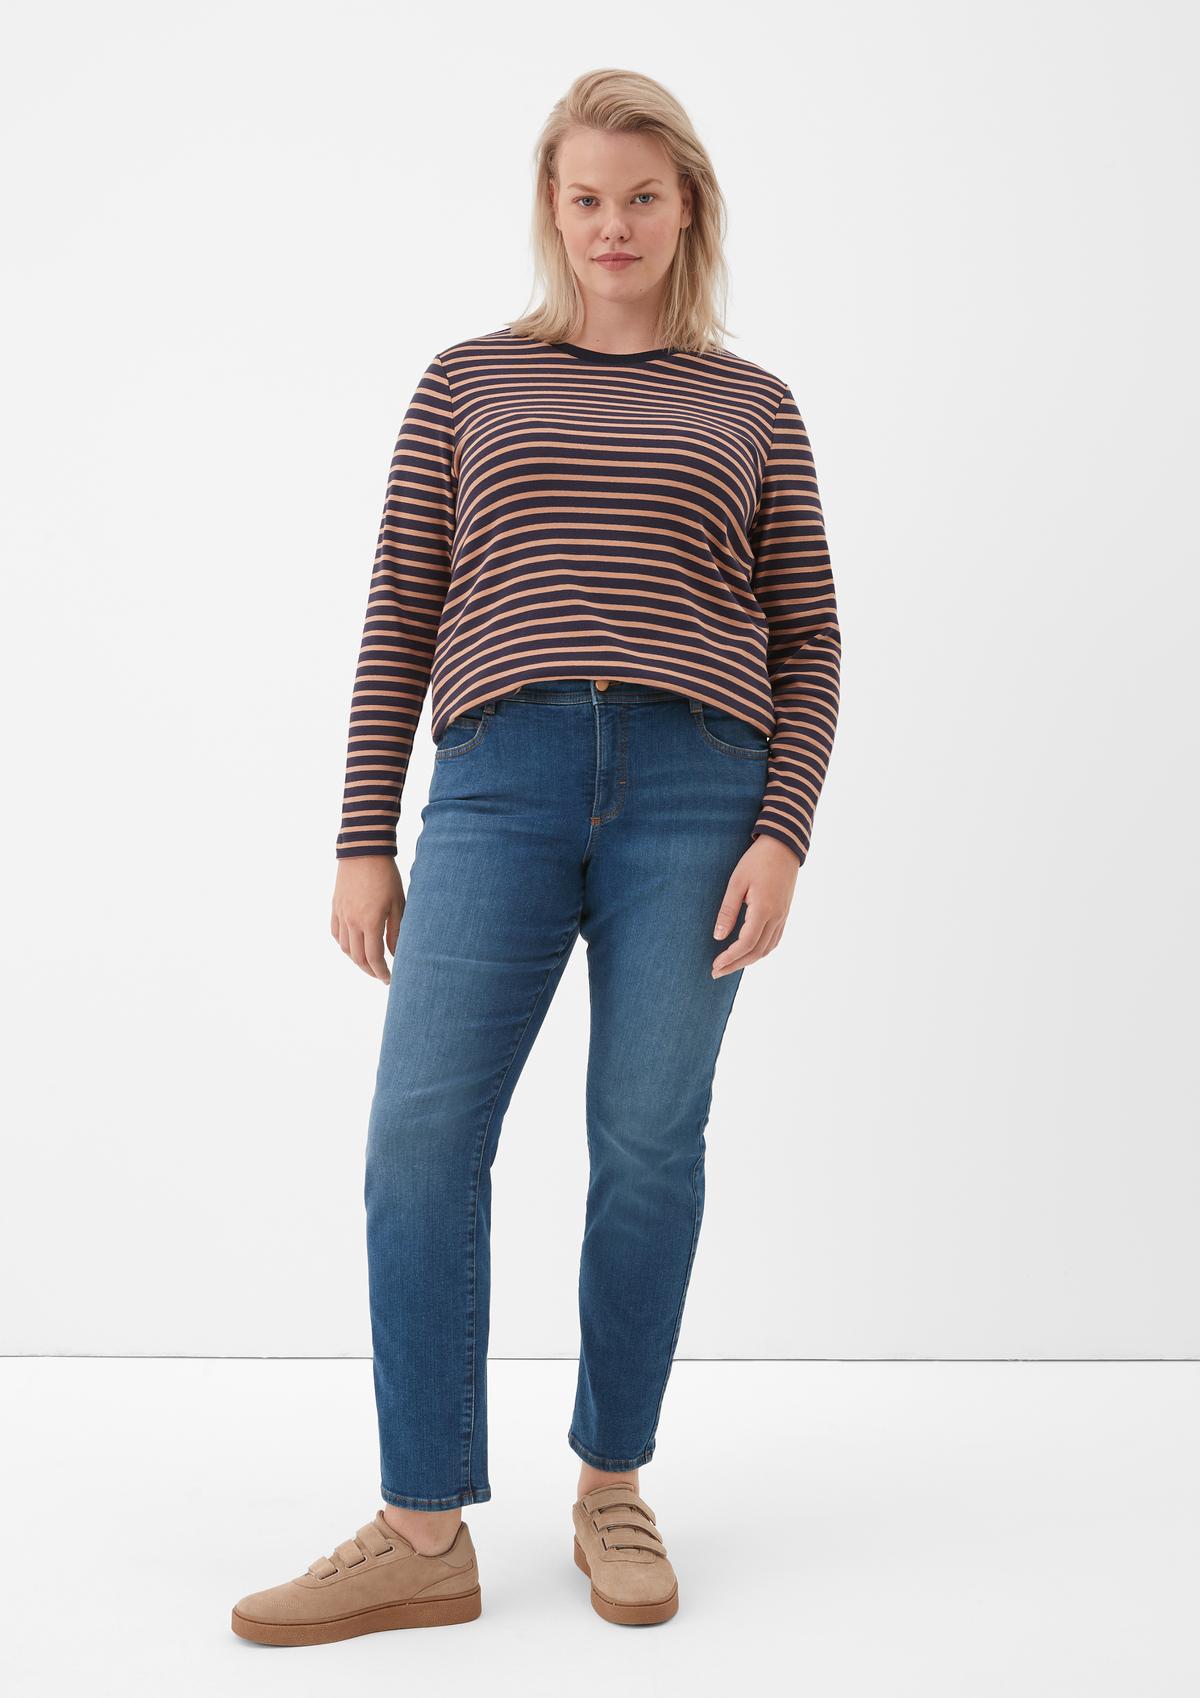 s.Oliver Slim fit: jeans with a vintage garment wash